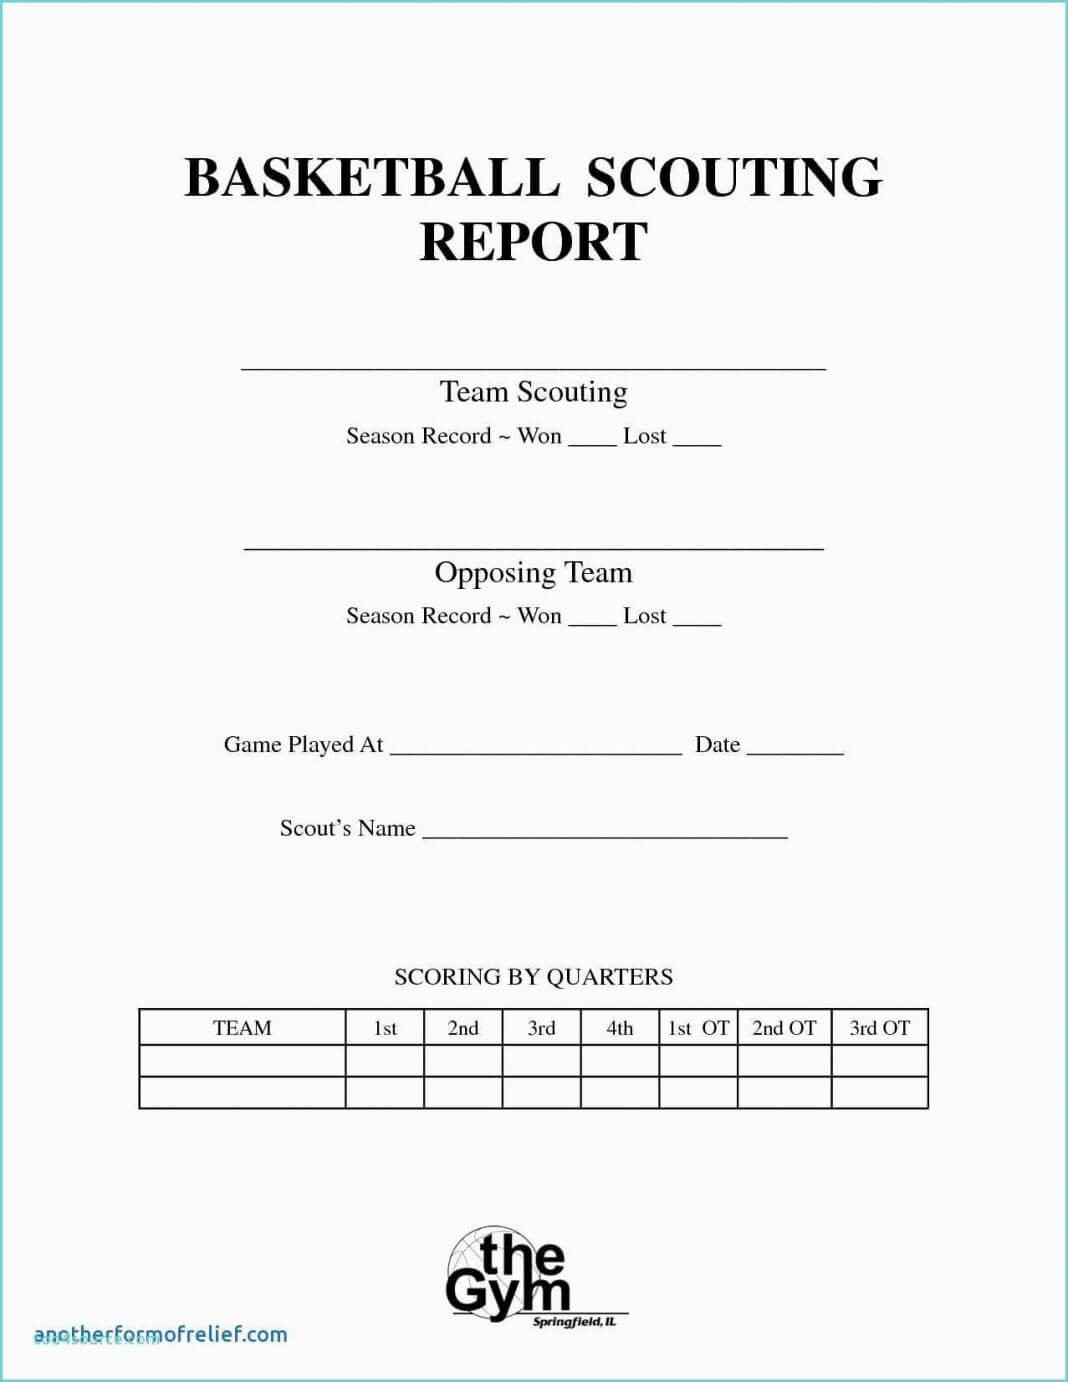 Report Examples Gamechart21 College Basketball Scouting Regarding Scouting Report Basketball Template